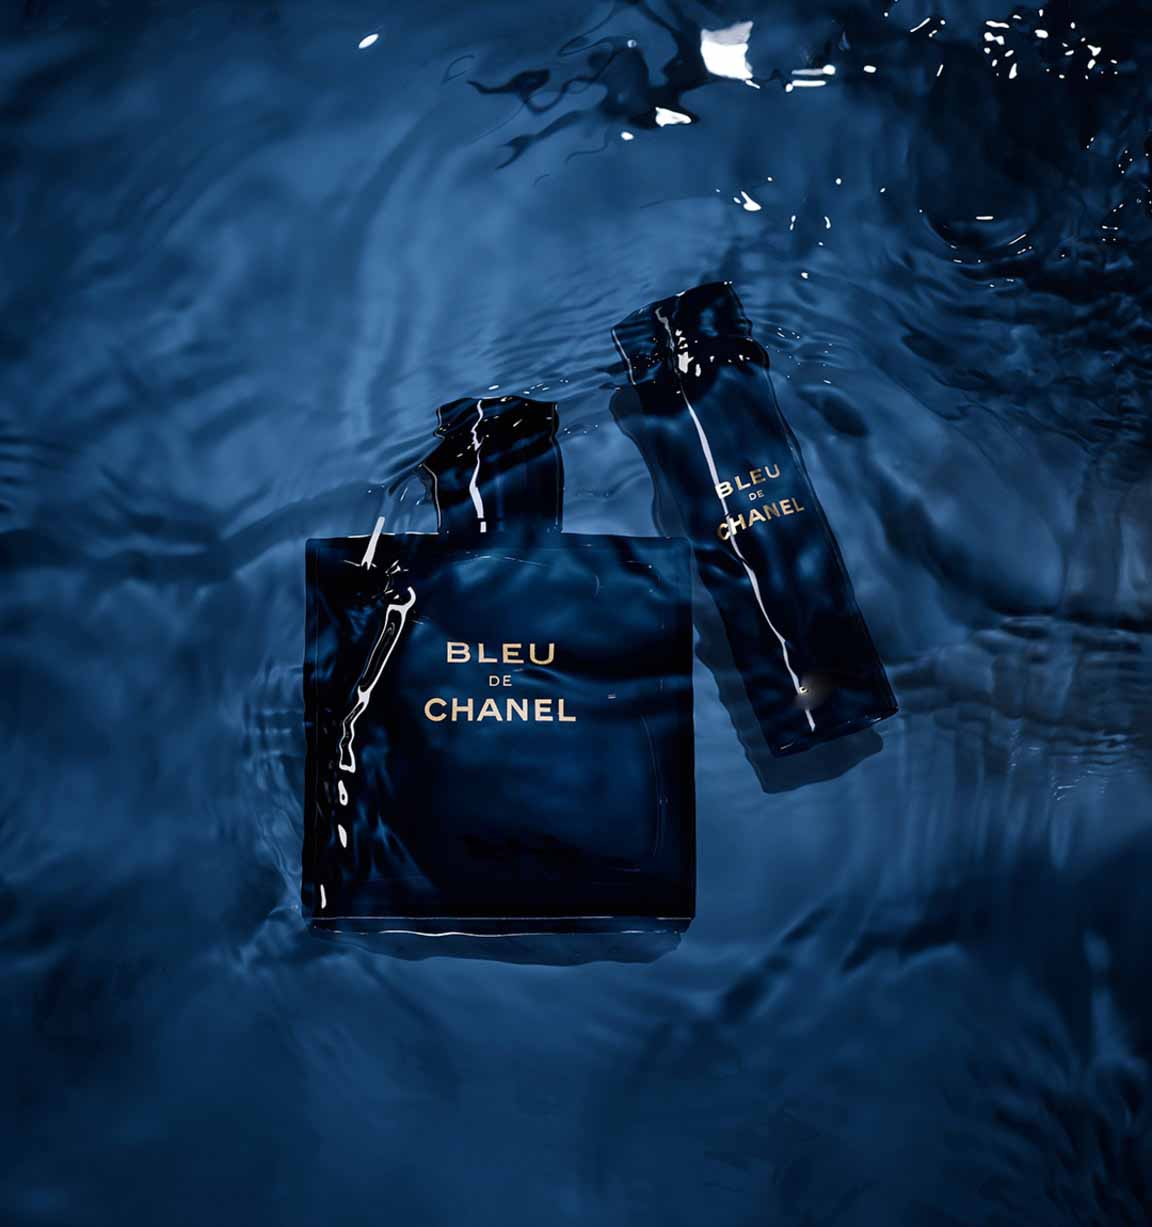 Bleu De Chanel Parfum, Cinematic Unboxing and Hands On